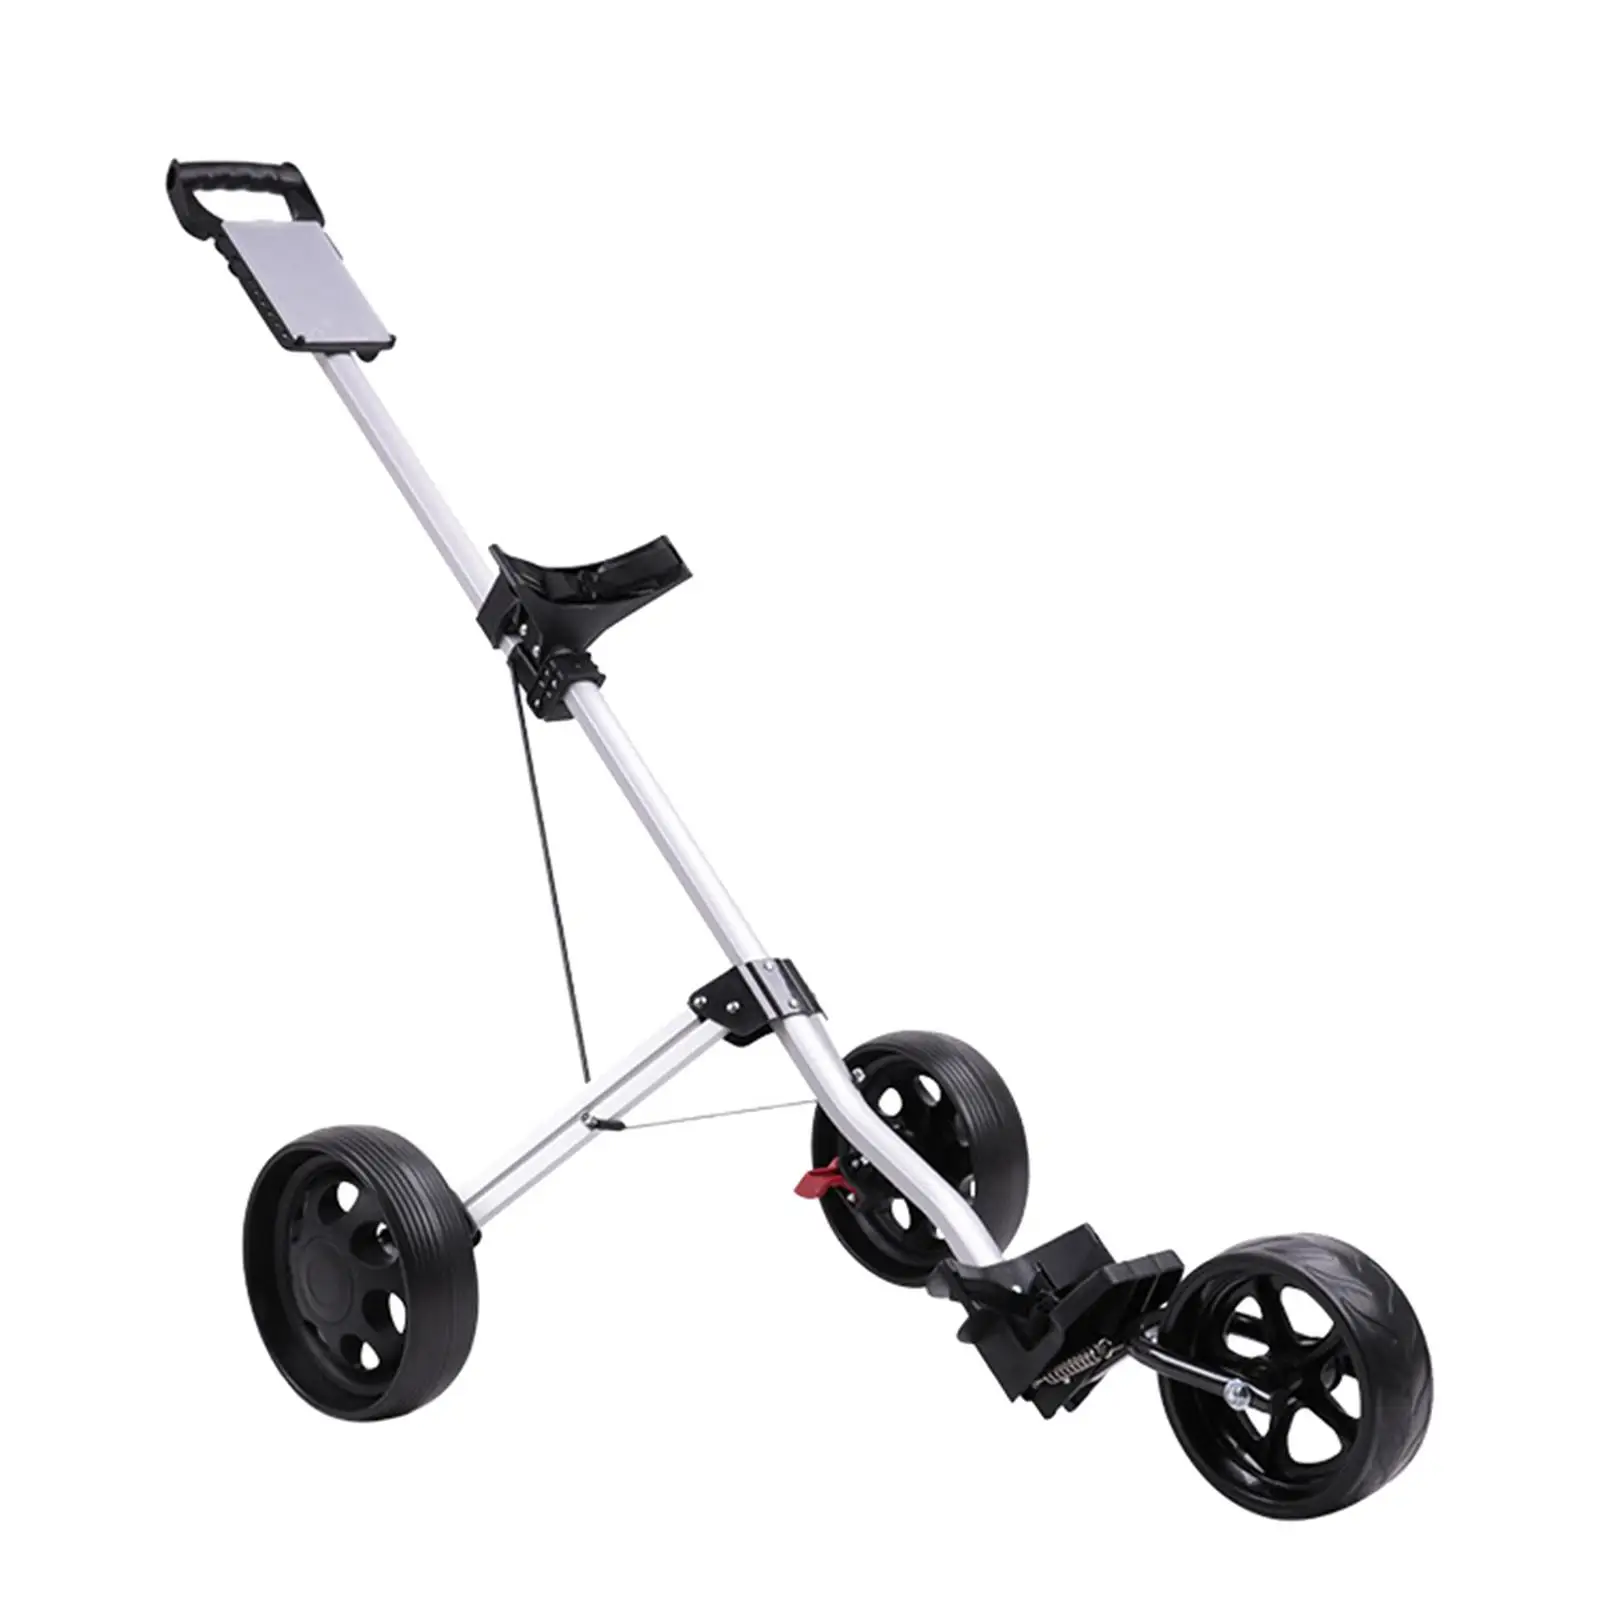 Push Pull Golf Cart Aluminum Alloy with Scoreboard 3 Wheeled Golf Accessories Folding Golf Push Trolley Golf Bag Carrier Cart